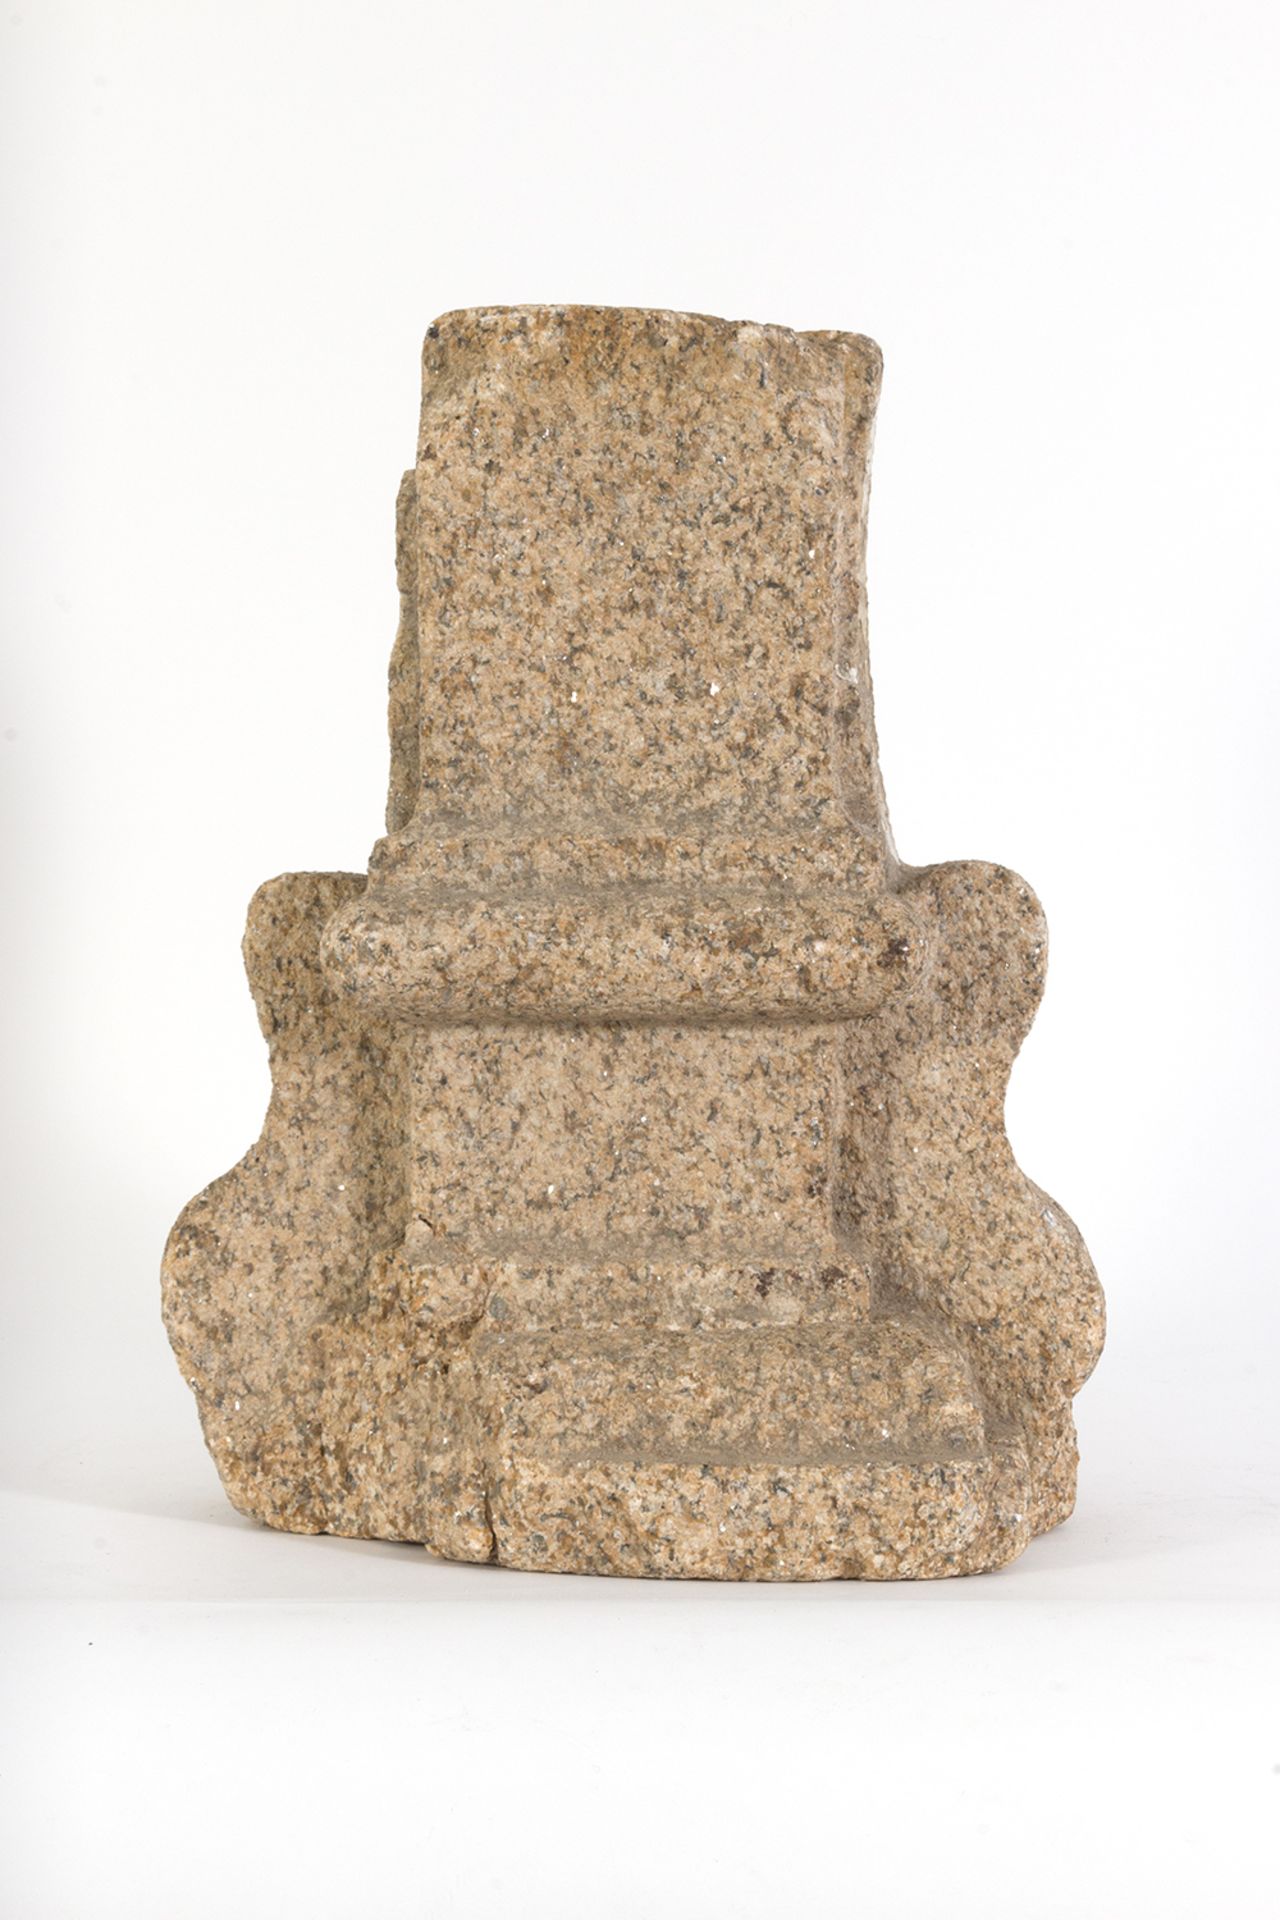 Capitel renacentista en granito tallado con motivos foliáceos. Toledo, siglo XVI. - Bild 2 aus 3